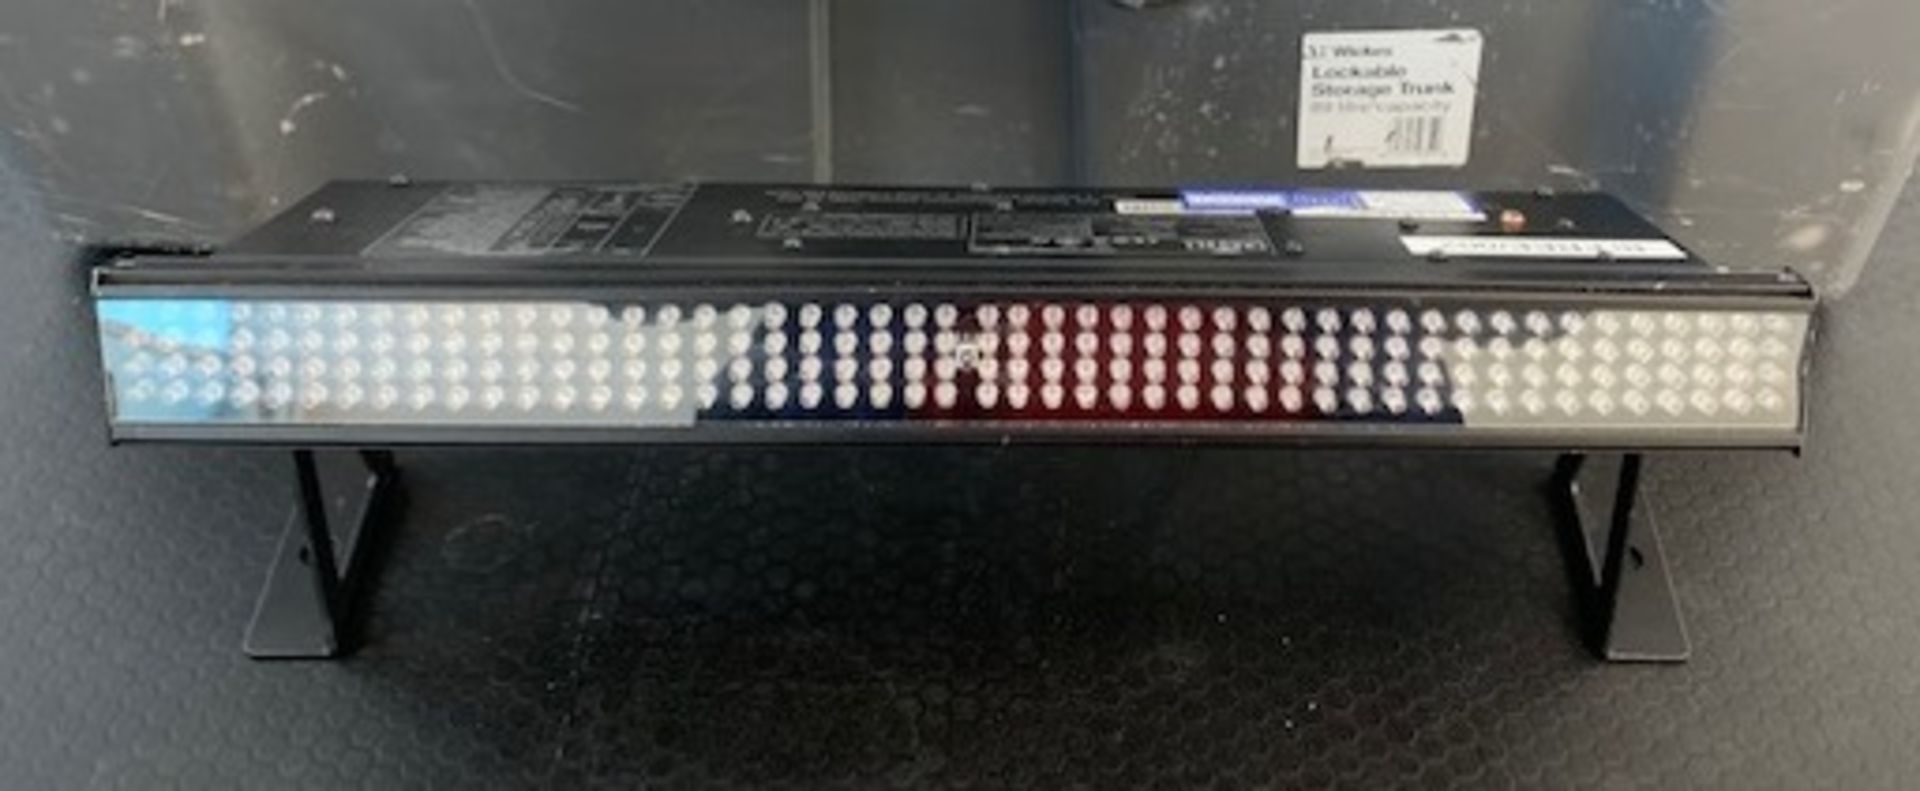 4 x Chauvet Freedom Mini Strips - Ref: 748 - CL581 - Location: Altrincham WA14